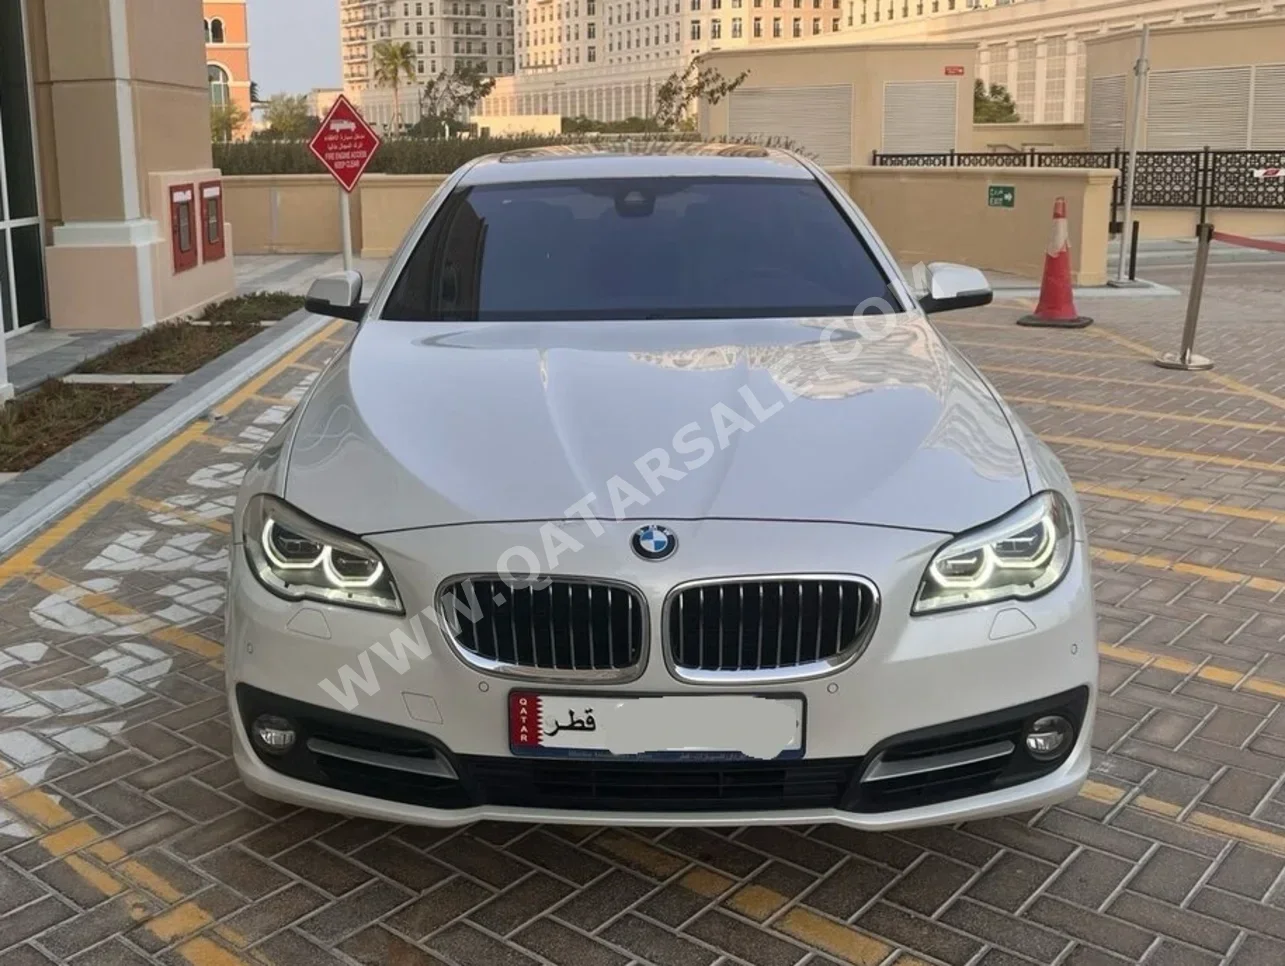 BMW  5-Series  535i  2016  Automatic  81,000 Km  6 Cylinder  Rear Wheel Drive (RWD)  Sedan  White